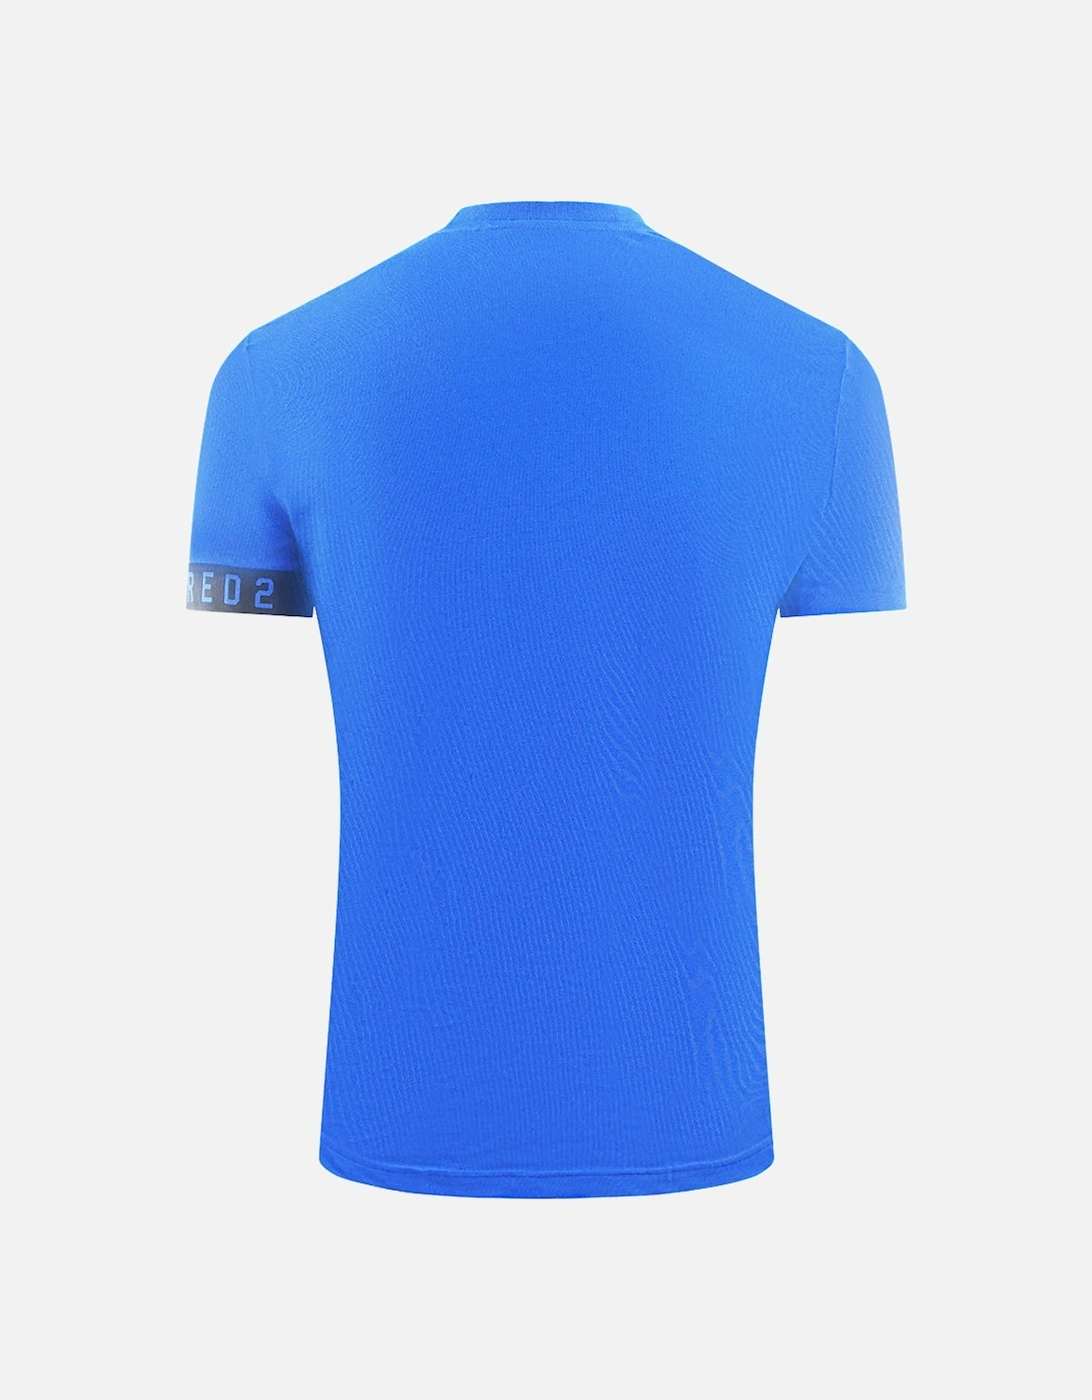 Brand Logo on Sleeve Blue Underwear T-Shirt